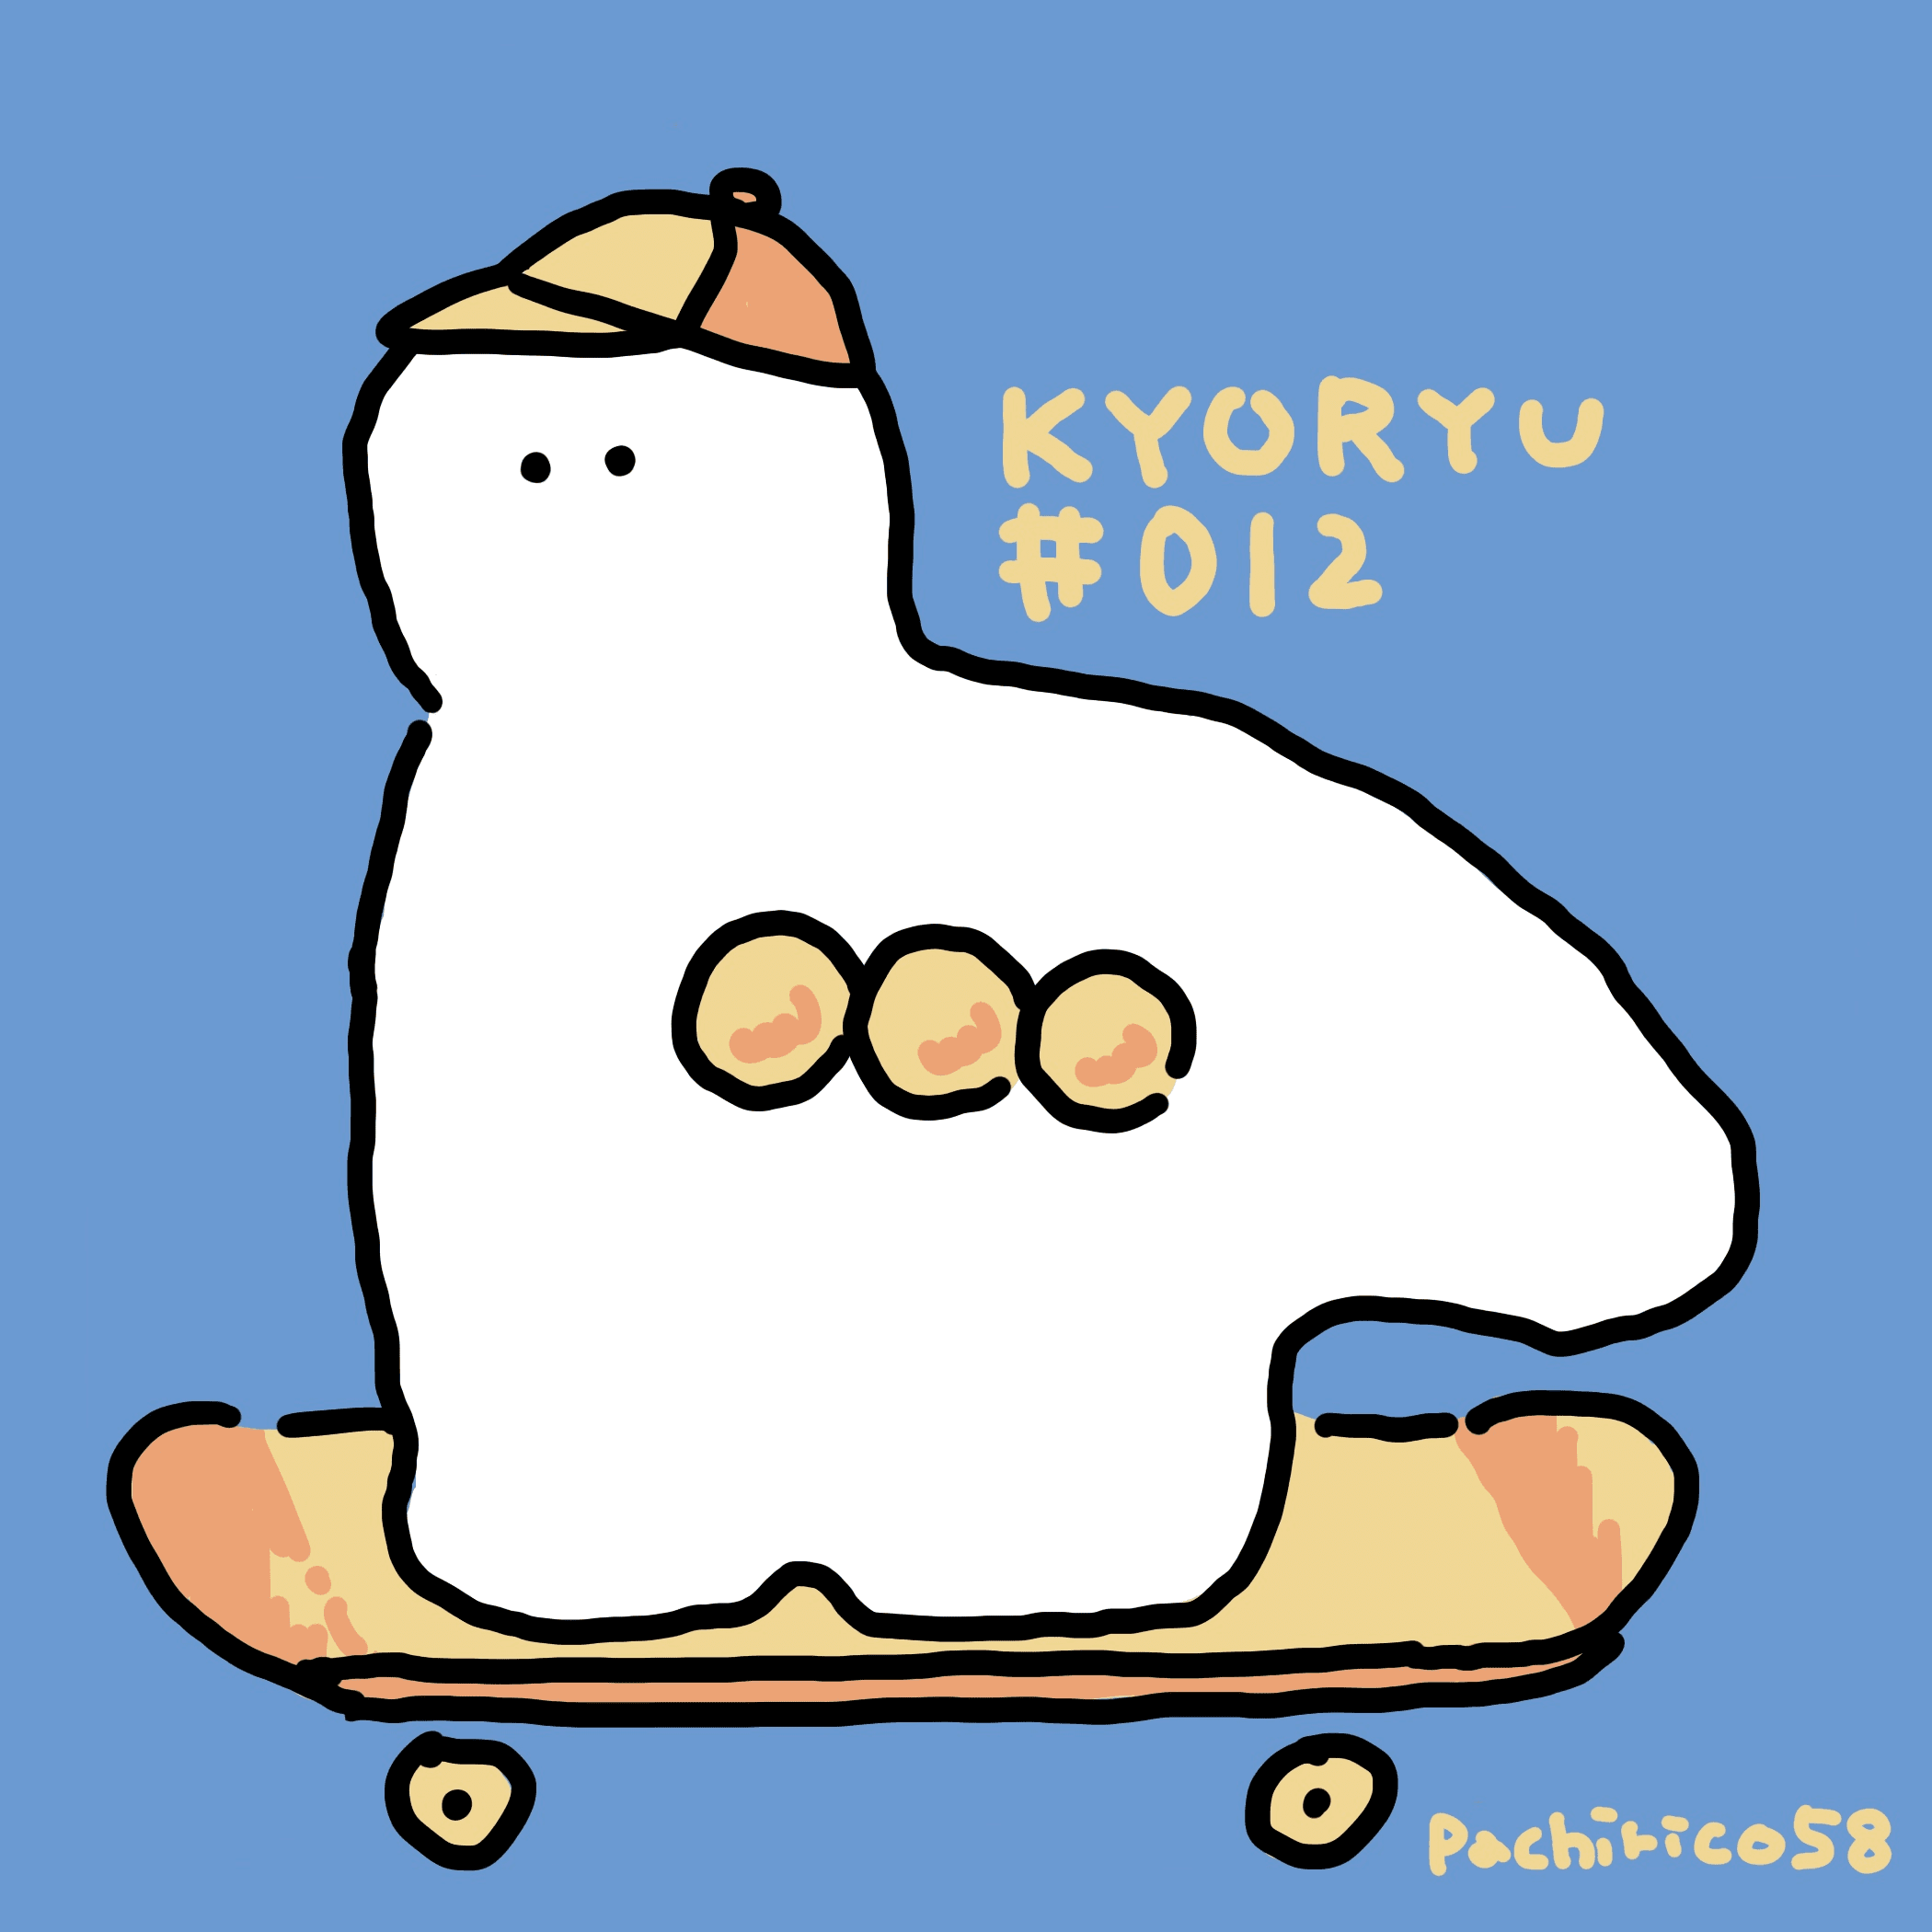 KYORYU#012